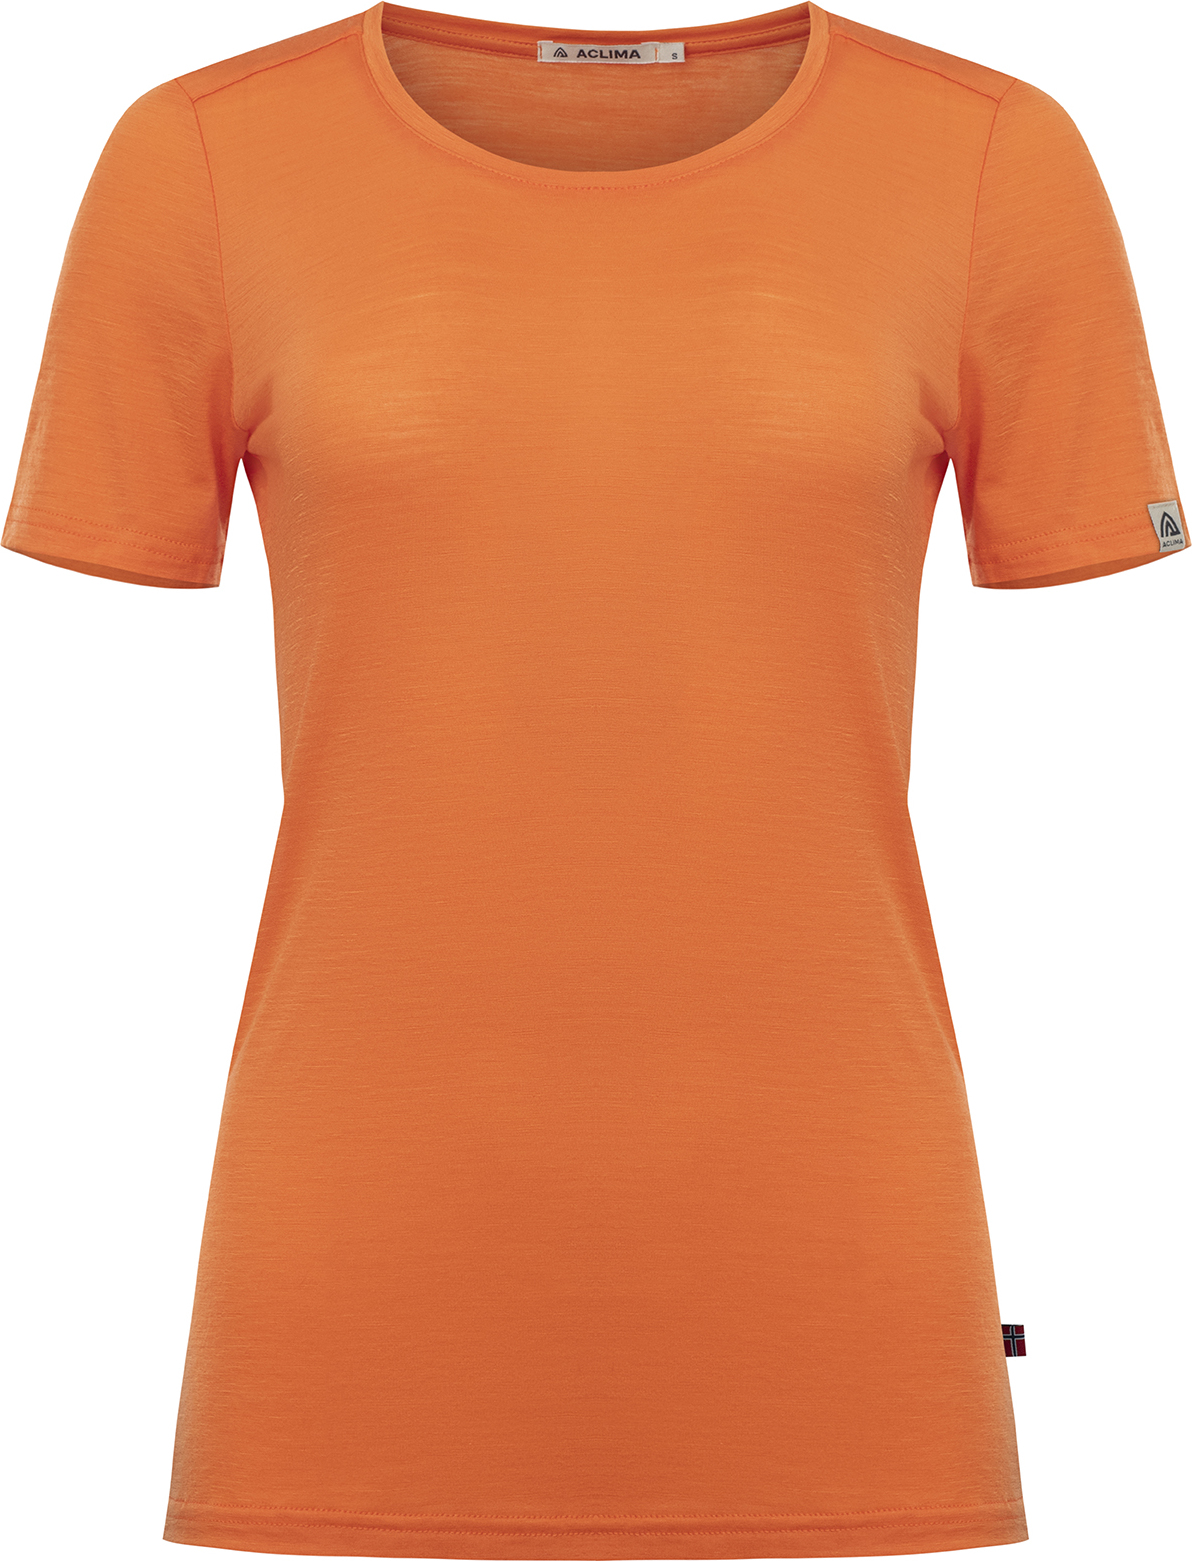 Aclima Women's LightWool 140 T-shirt Orange Tiger